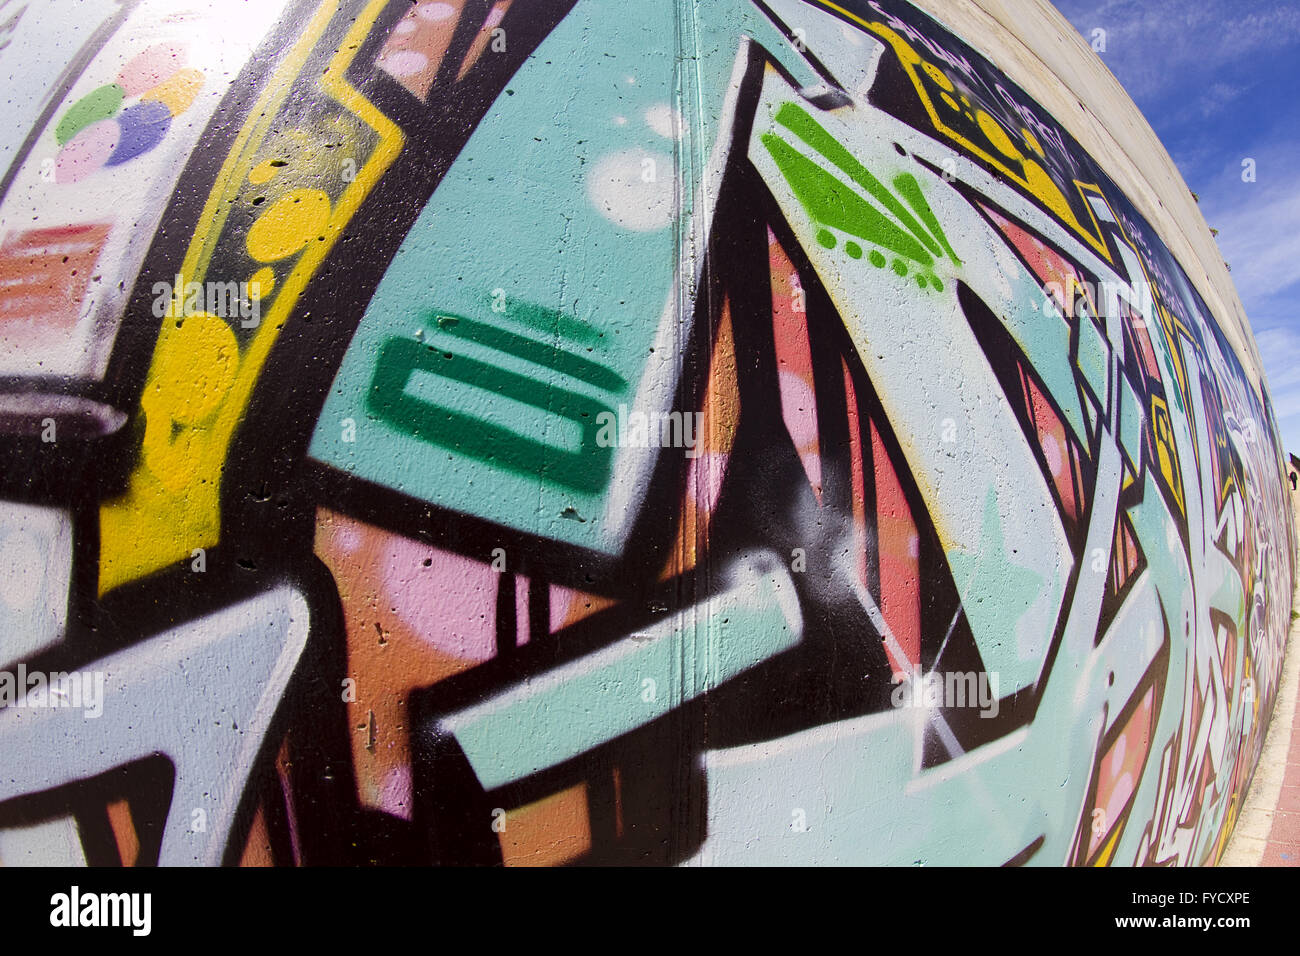 Street art, urban grafitti on wall Stock Photo